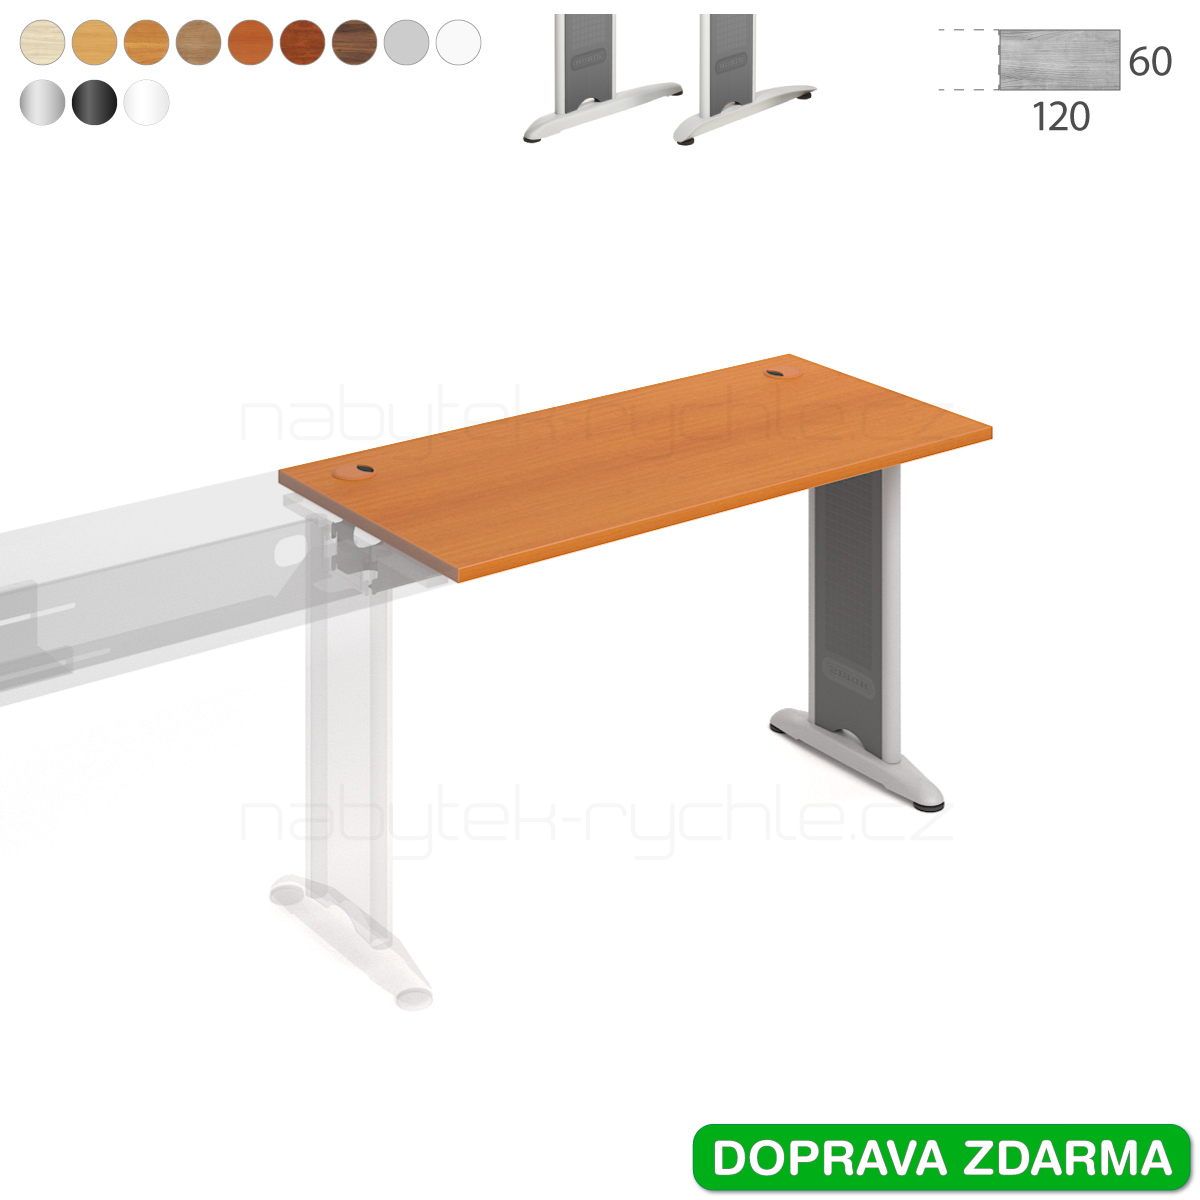 FE 1200 R Hobis Flex - Stůl 120 x 60 navazující